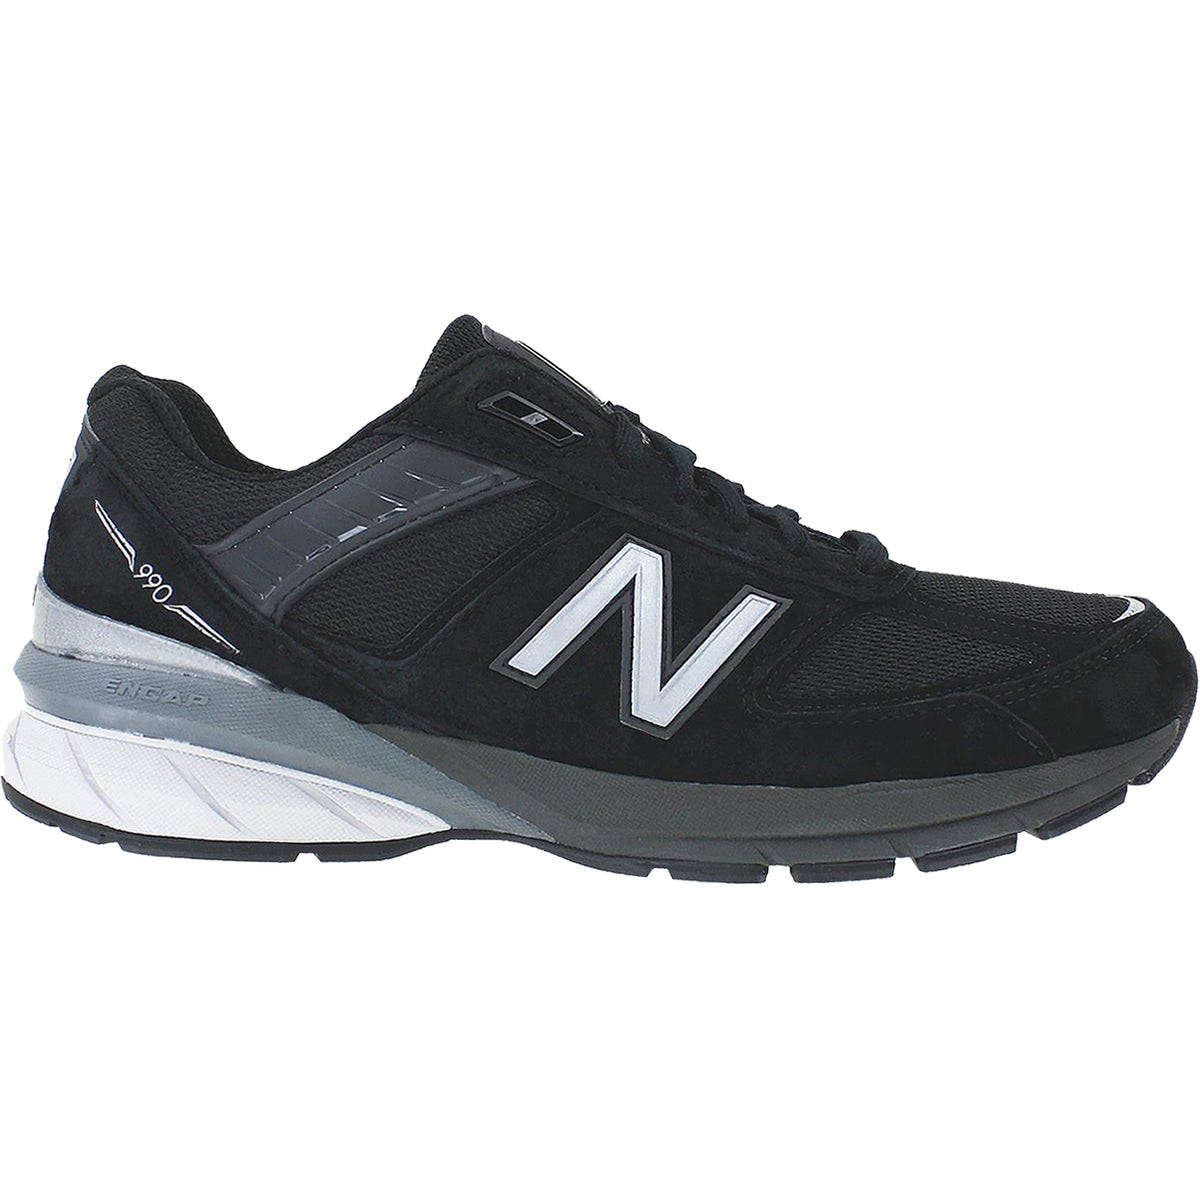 New Balance M990v5 | Men's Athletic Shoes | Footwear etc.